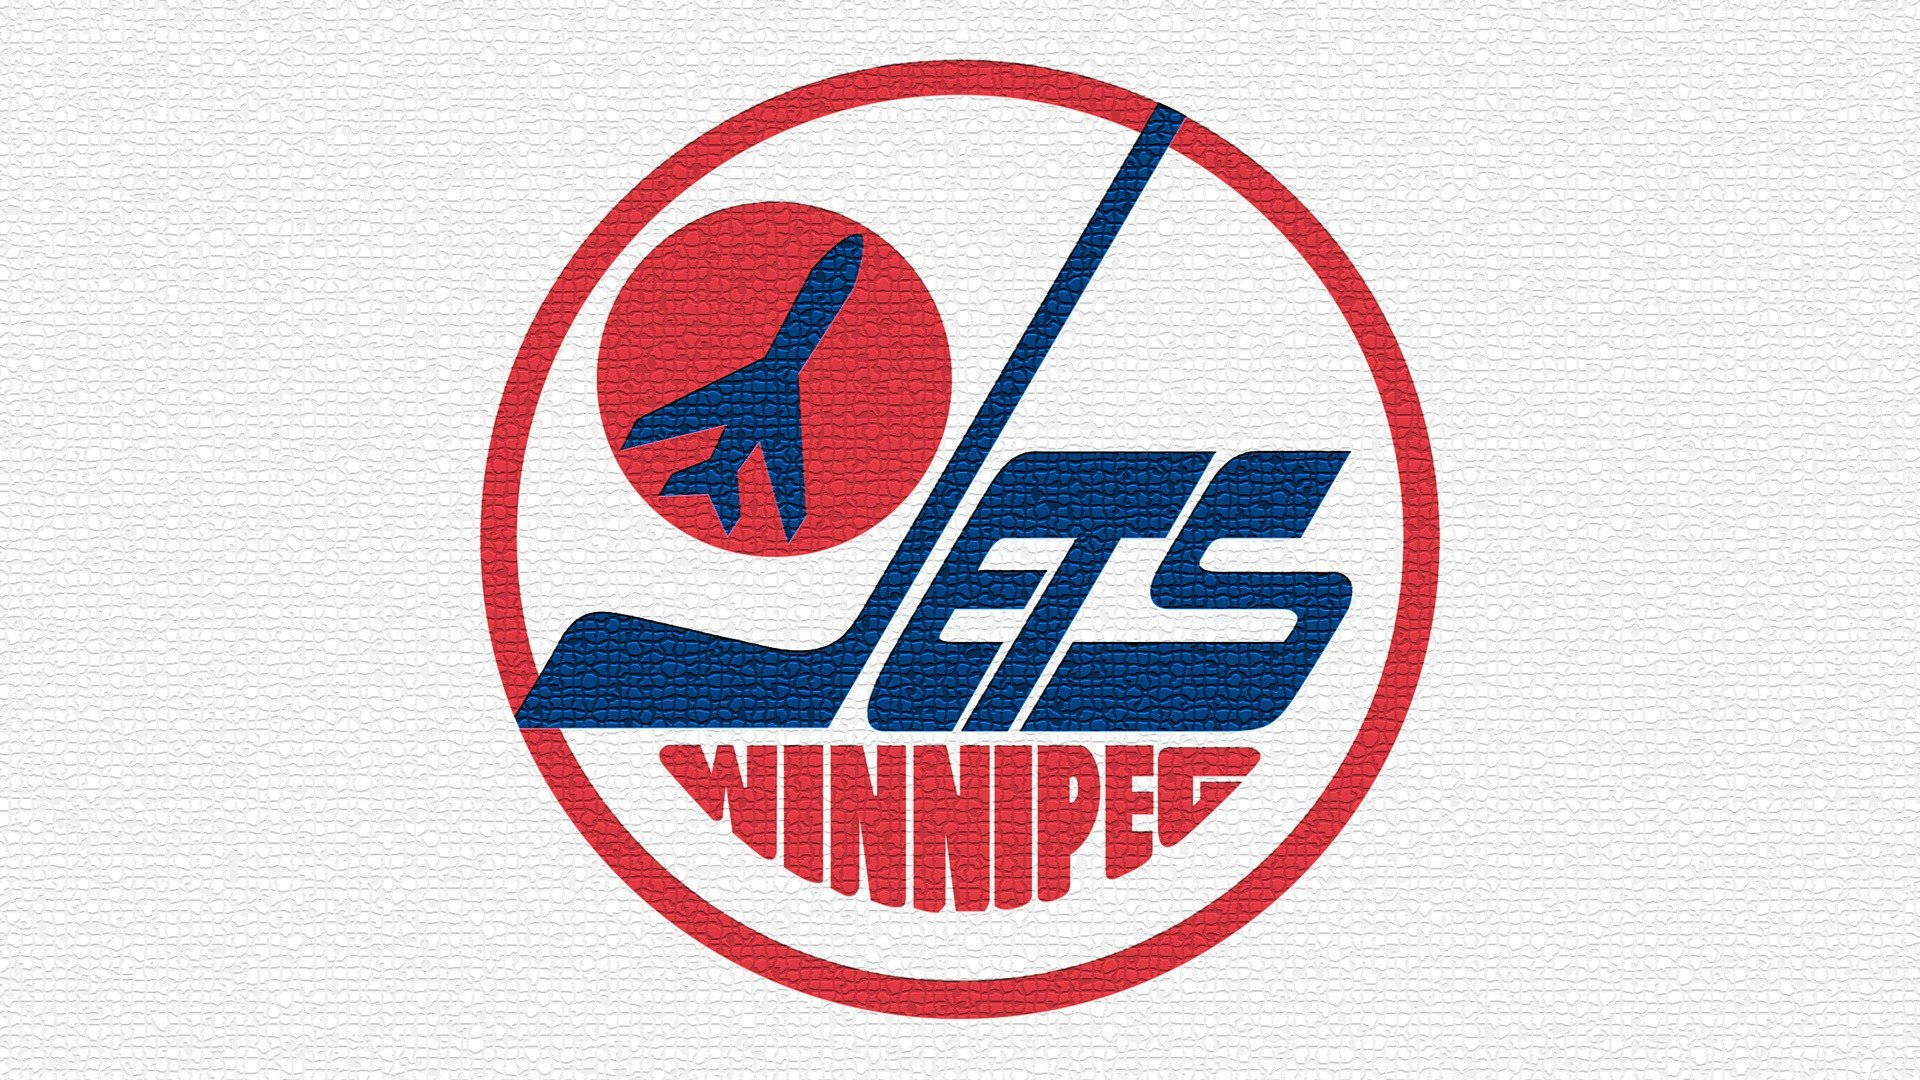 Winnipeg Jets Ice Hockey Emblem Background